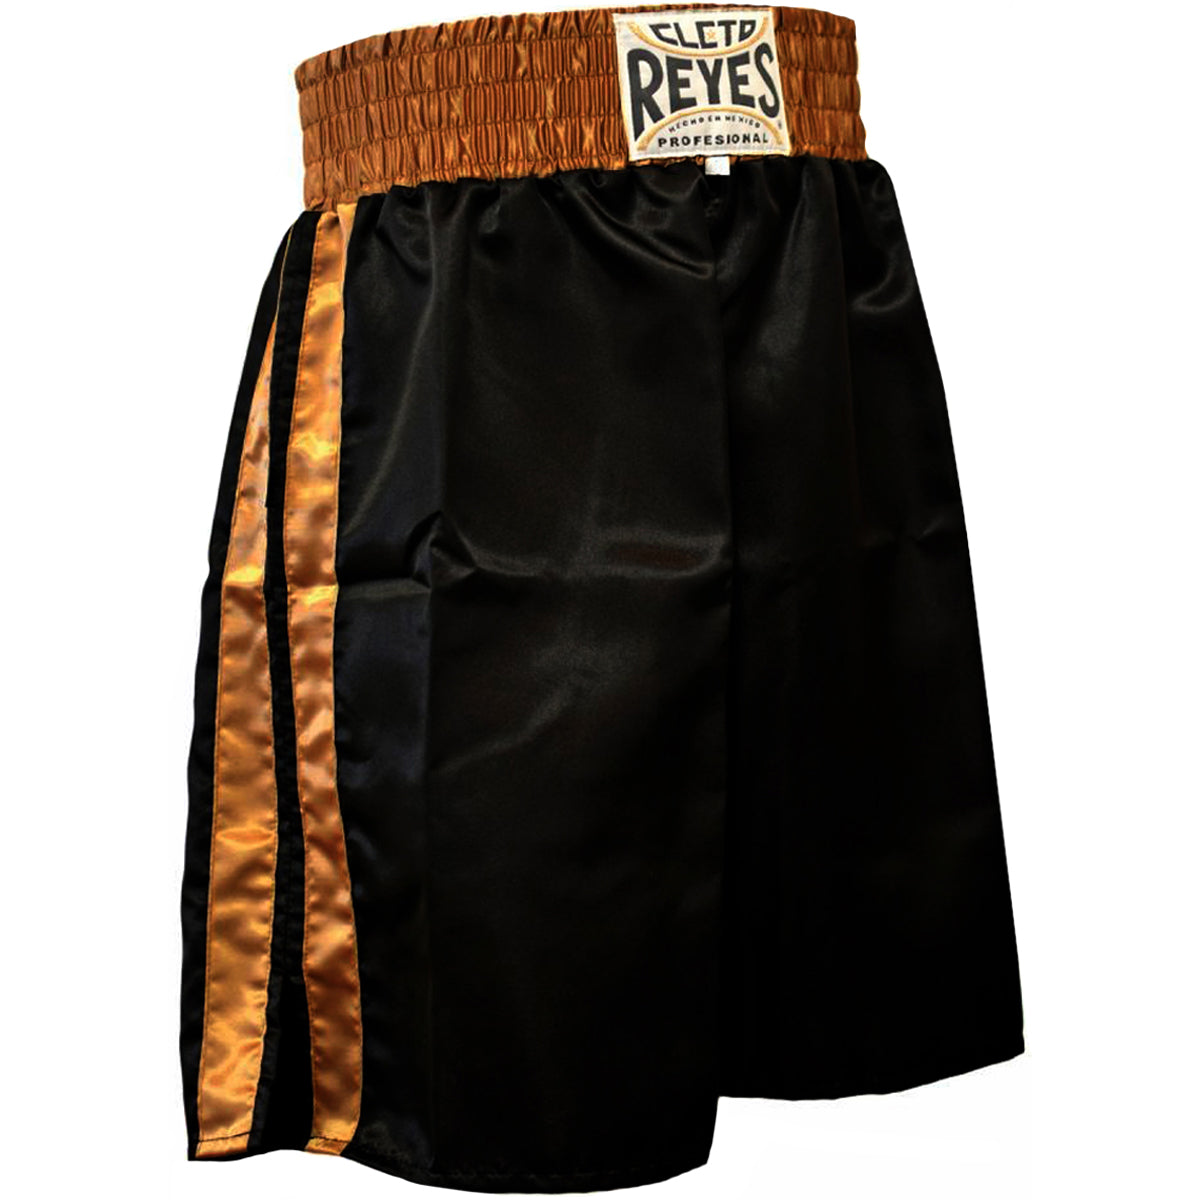 Cleto Reyes Satin Classic Boxing Trunks - Black/Gold Cleto Reyes